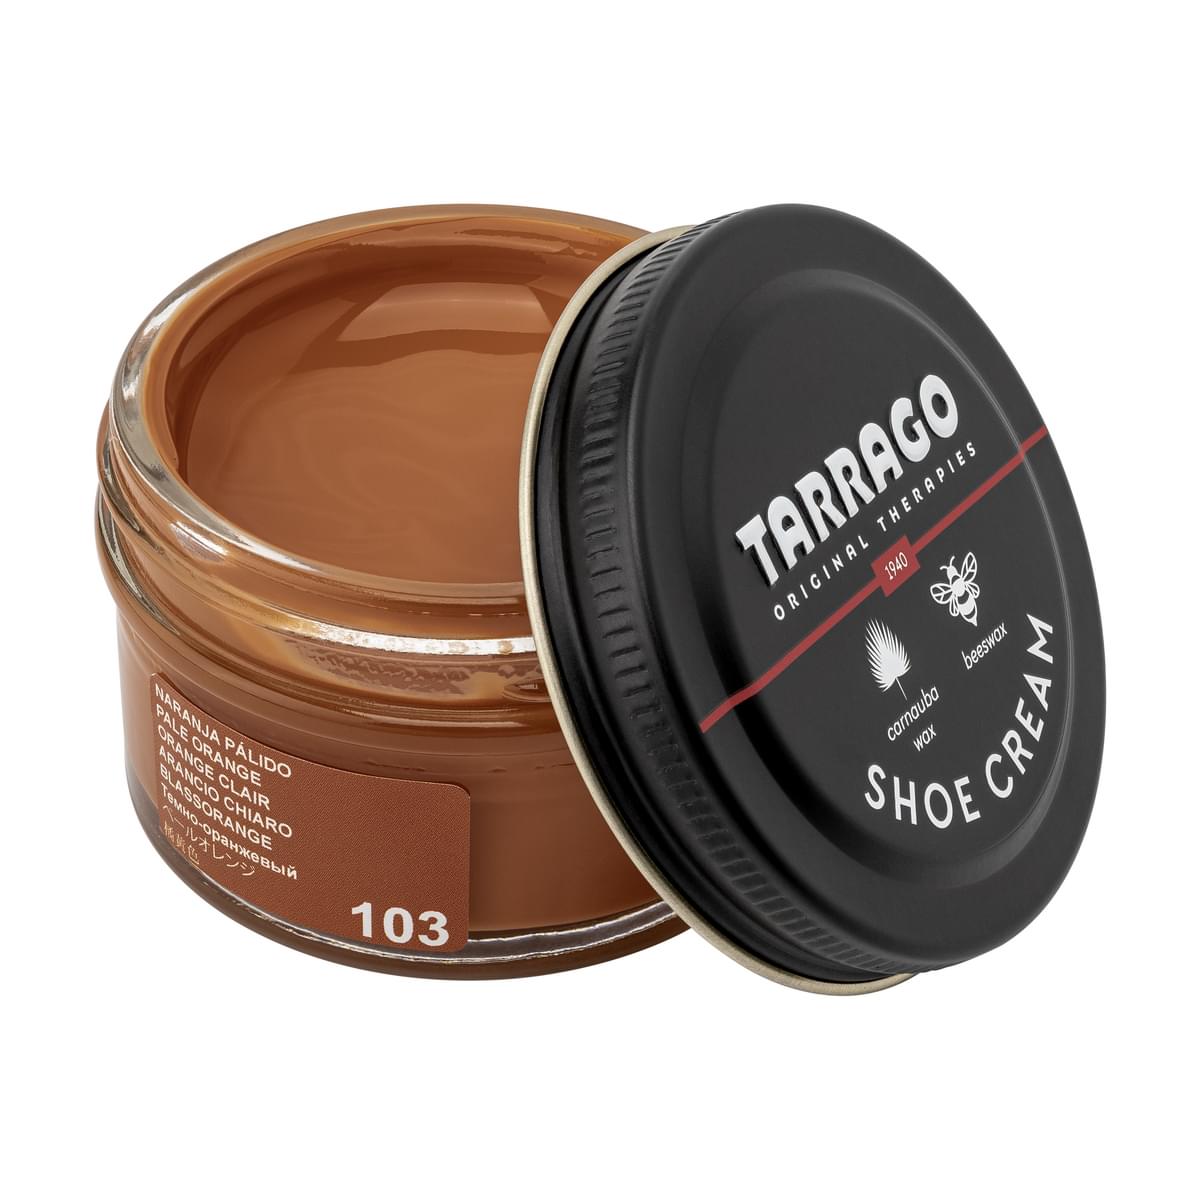 Tarrago Shoe Cream  - Pale Orange - 103